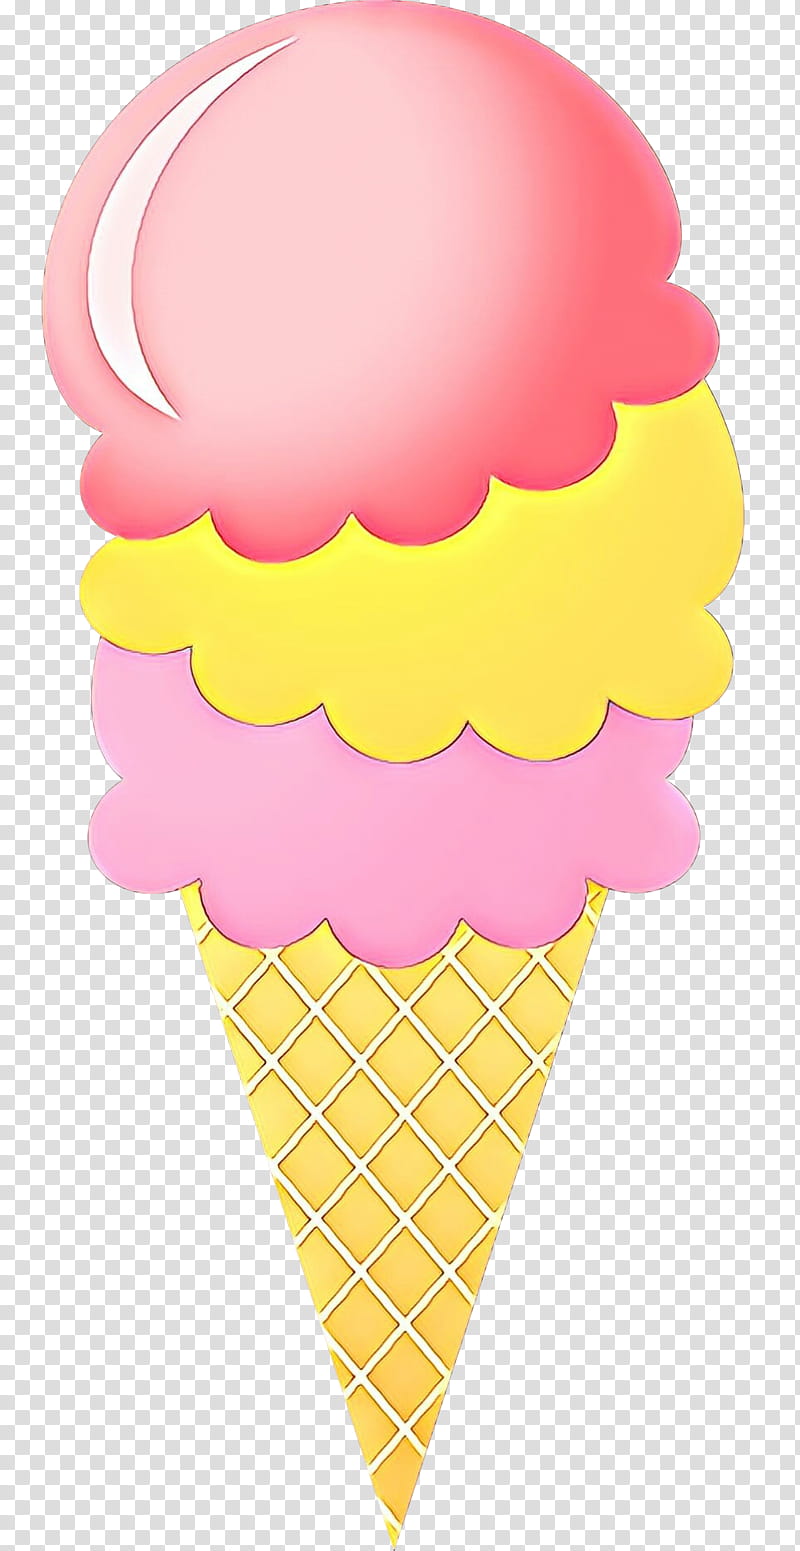 Ice Cream Cone, Cartoon, Ice Cream Cones, Vanilla Ice Cream, Strawberry Ice Cream, Food, Candy, Dessert transparent background PNG clipart